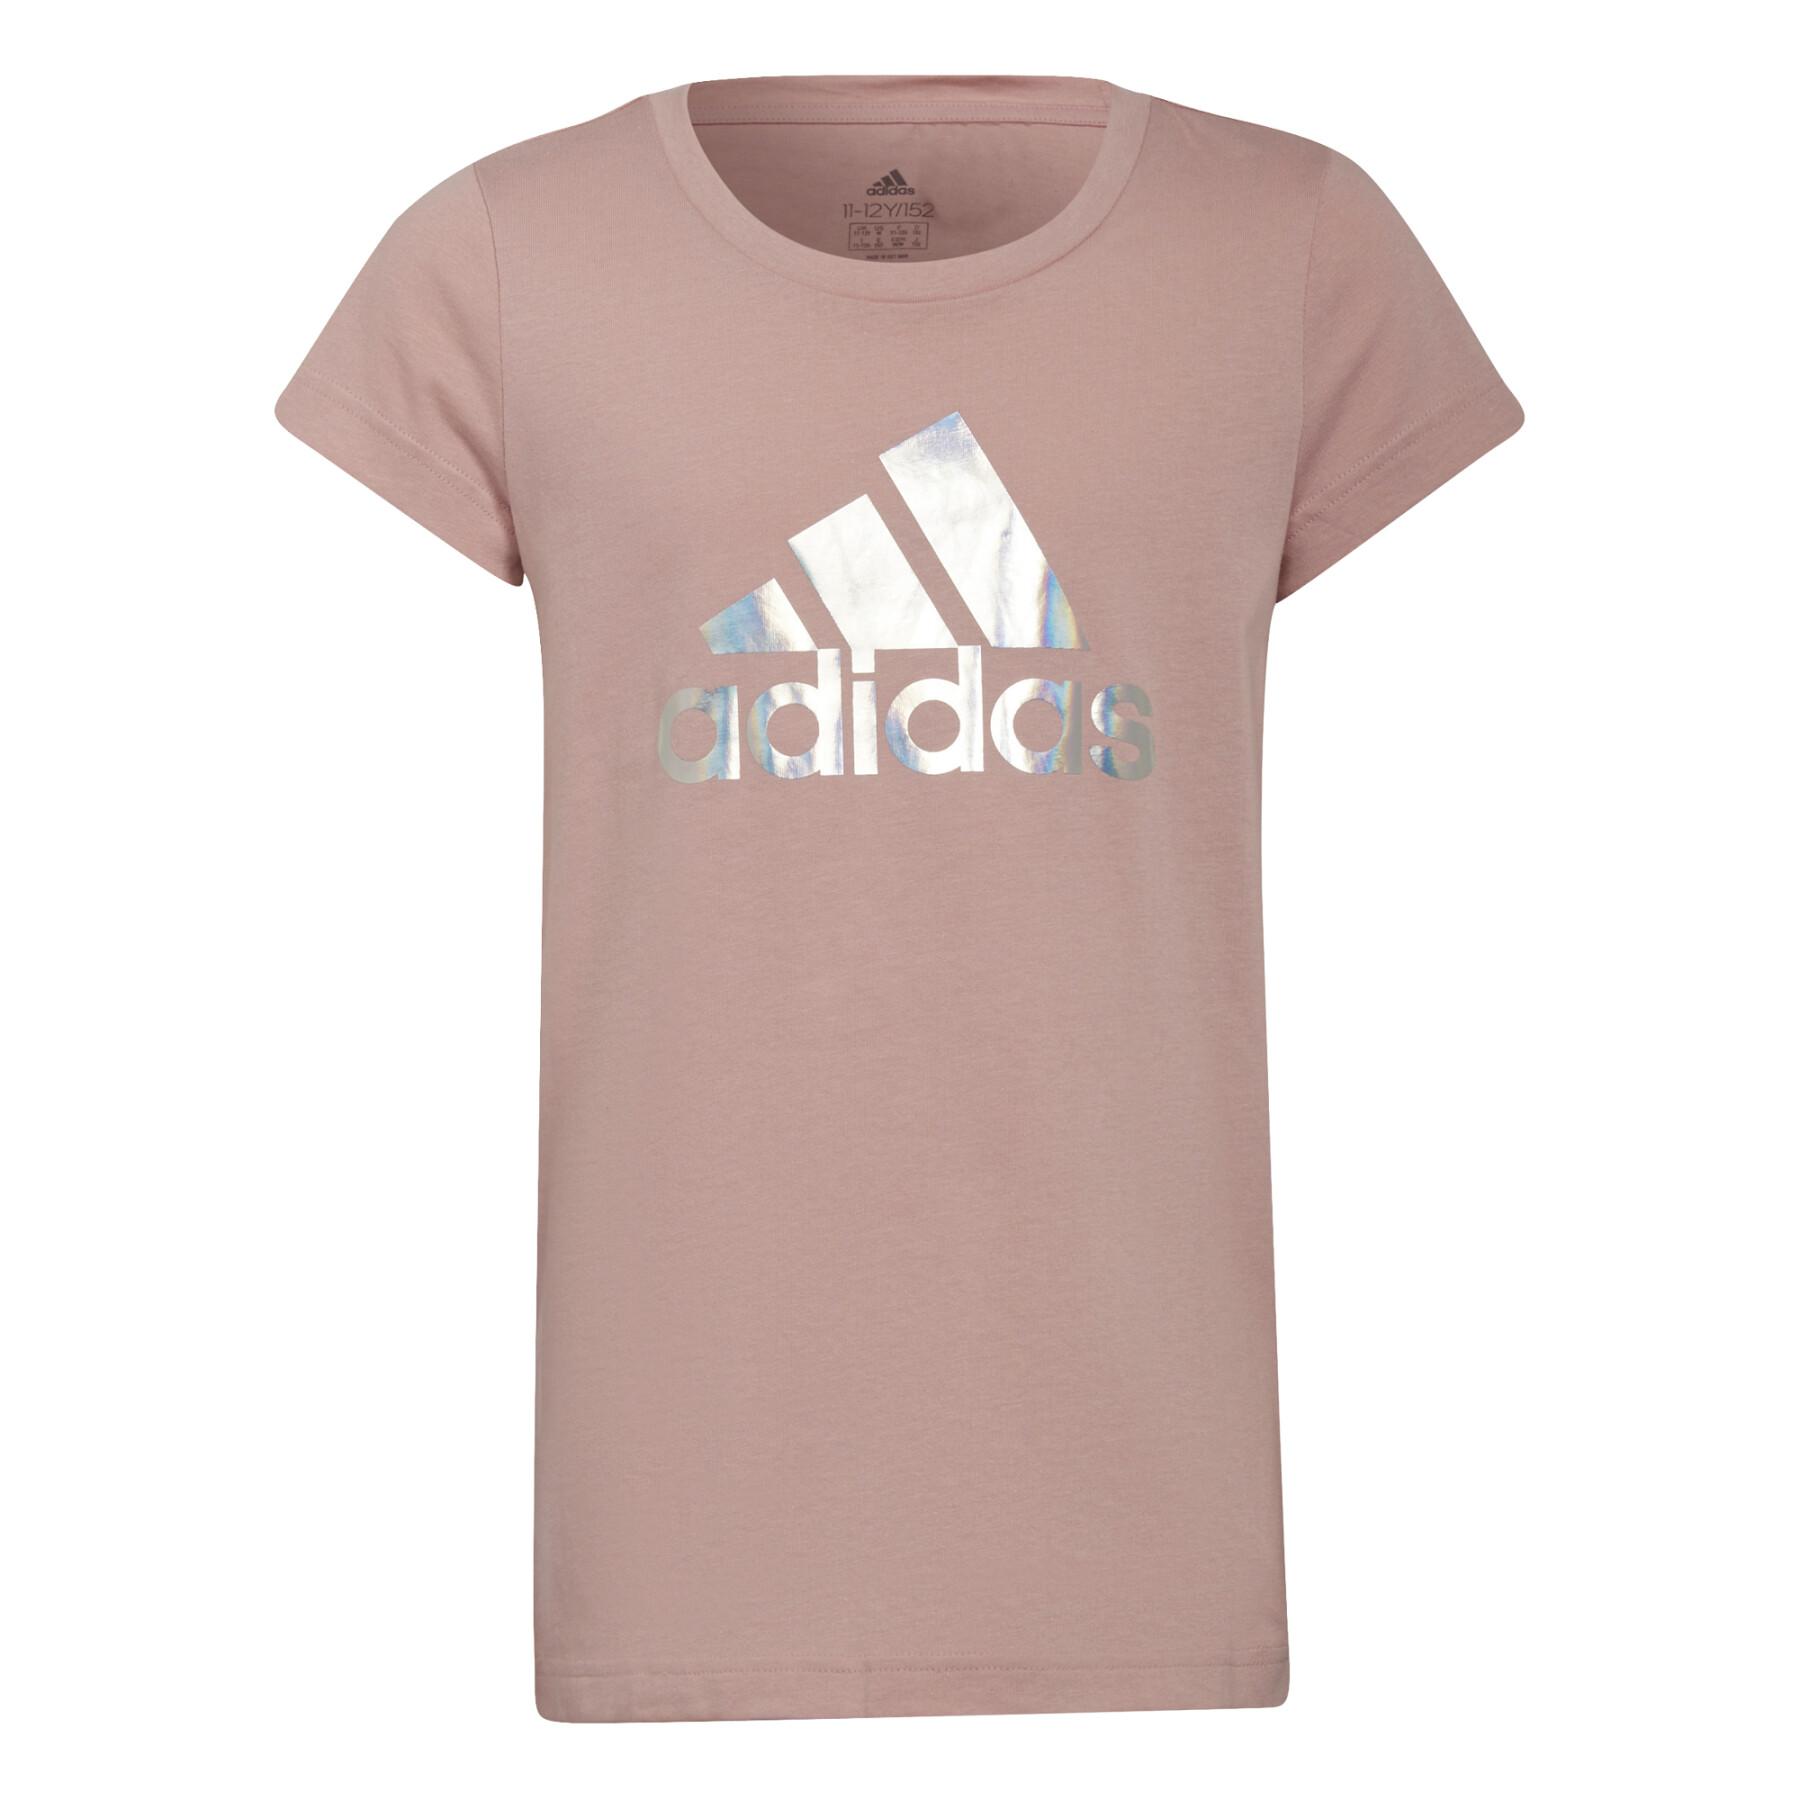 T-shirt de rapariga adidas Dance Metallic Print